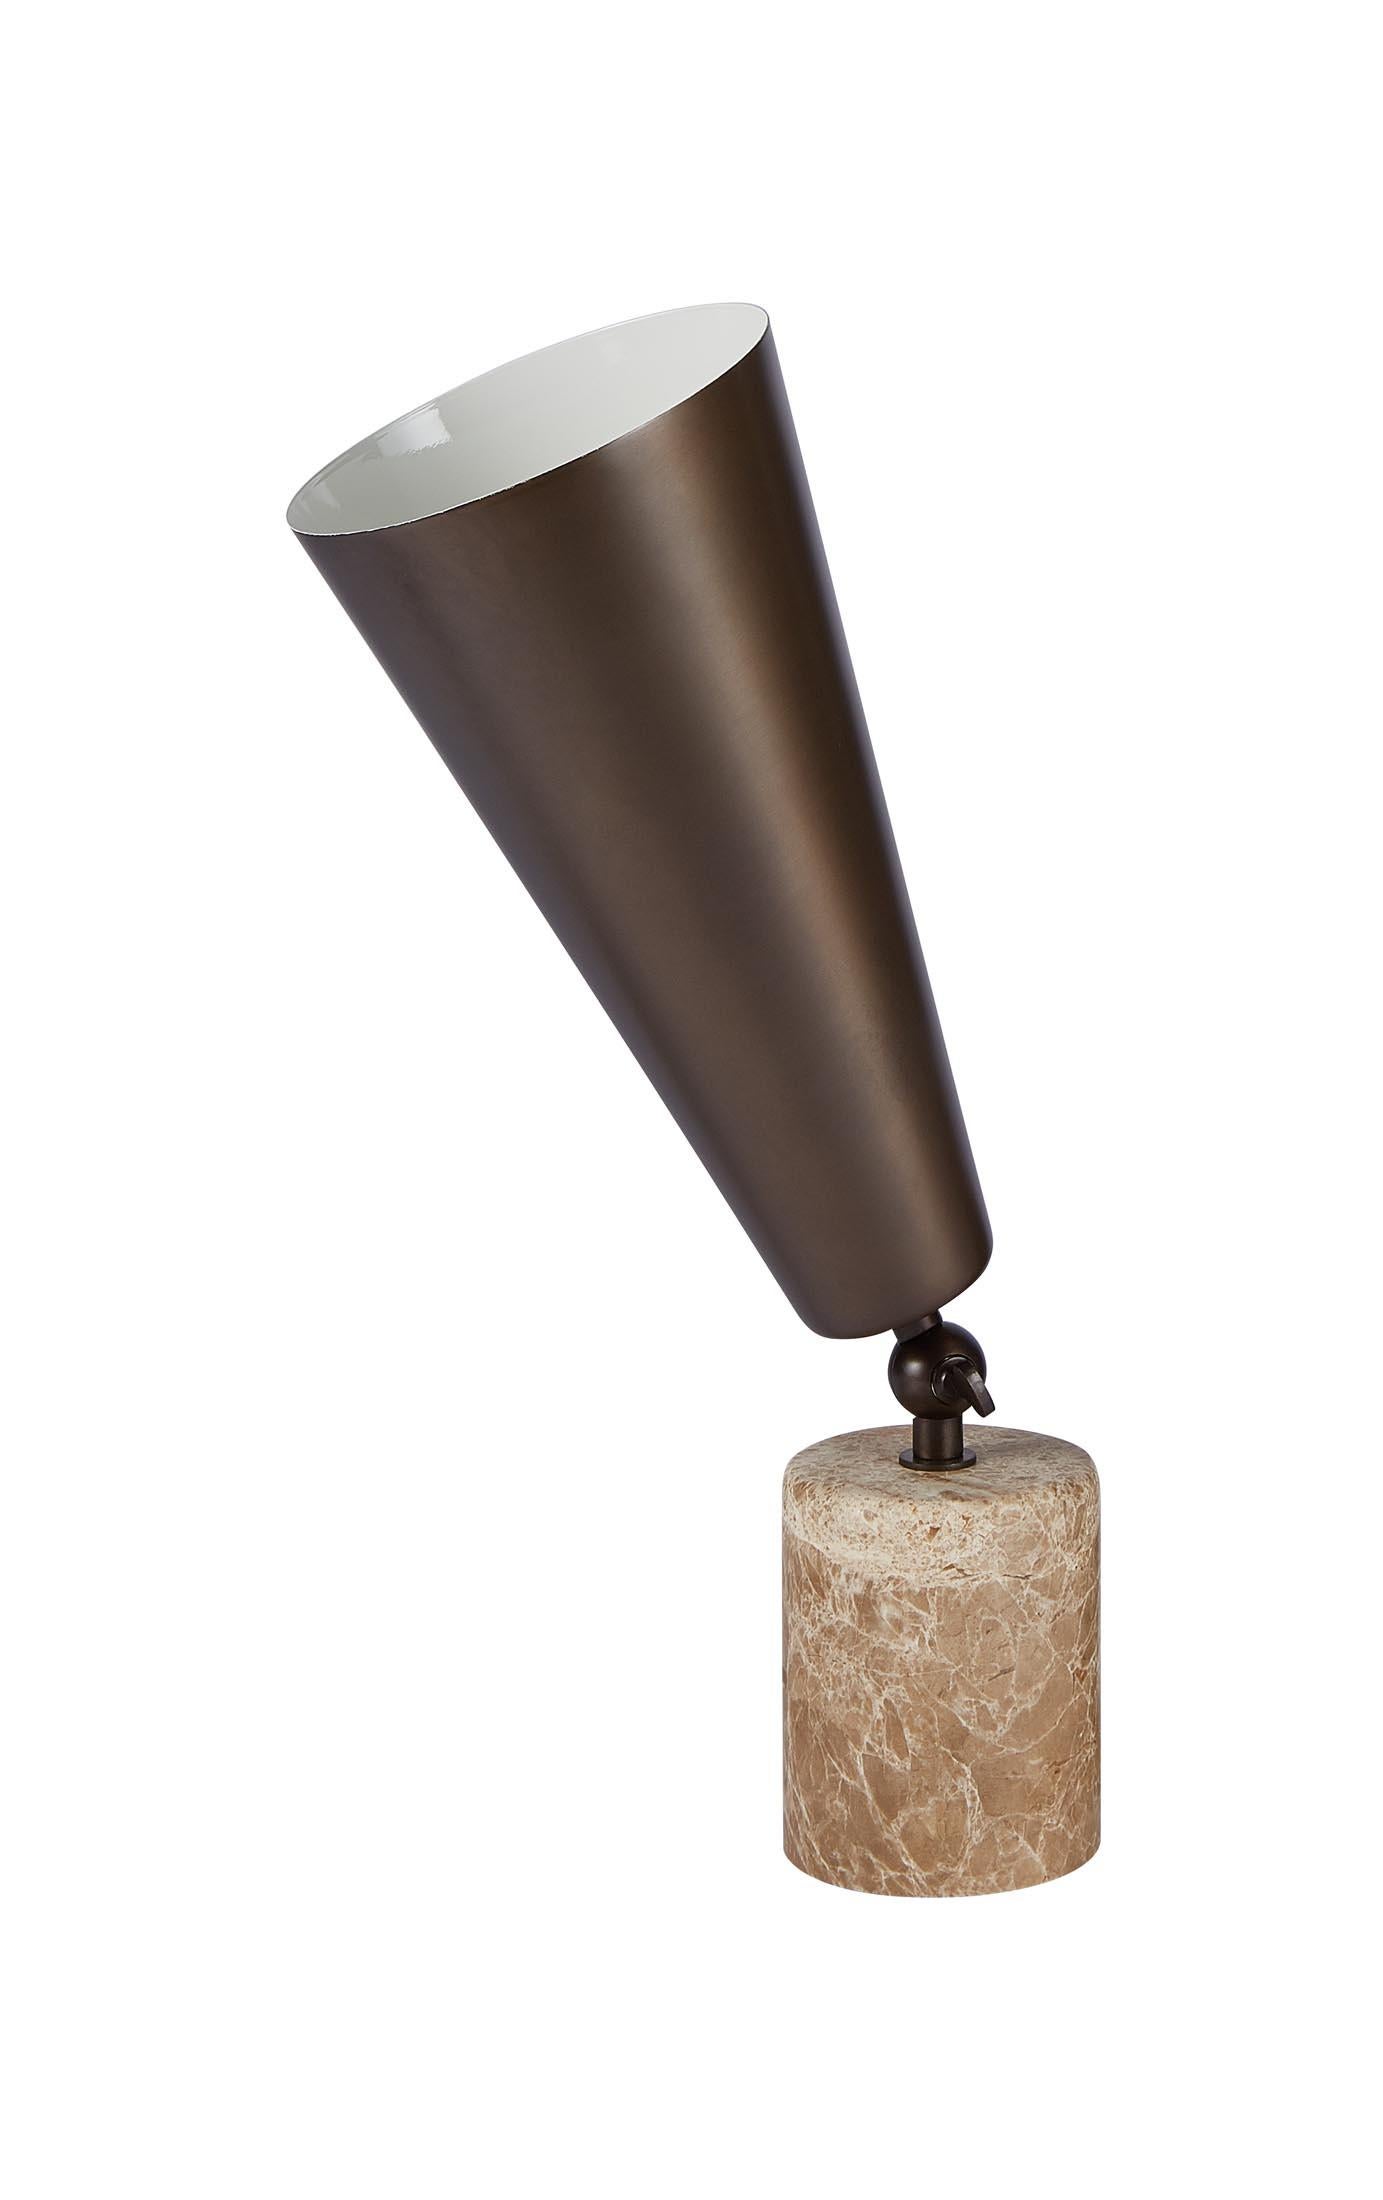 Tato Italia 'Vox' Table Lamp in White Carrara Marble, Satin Brass, and White For Sale 4